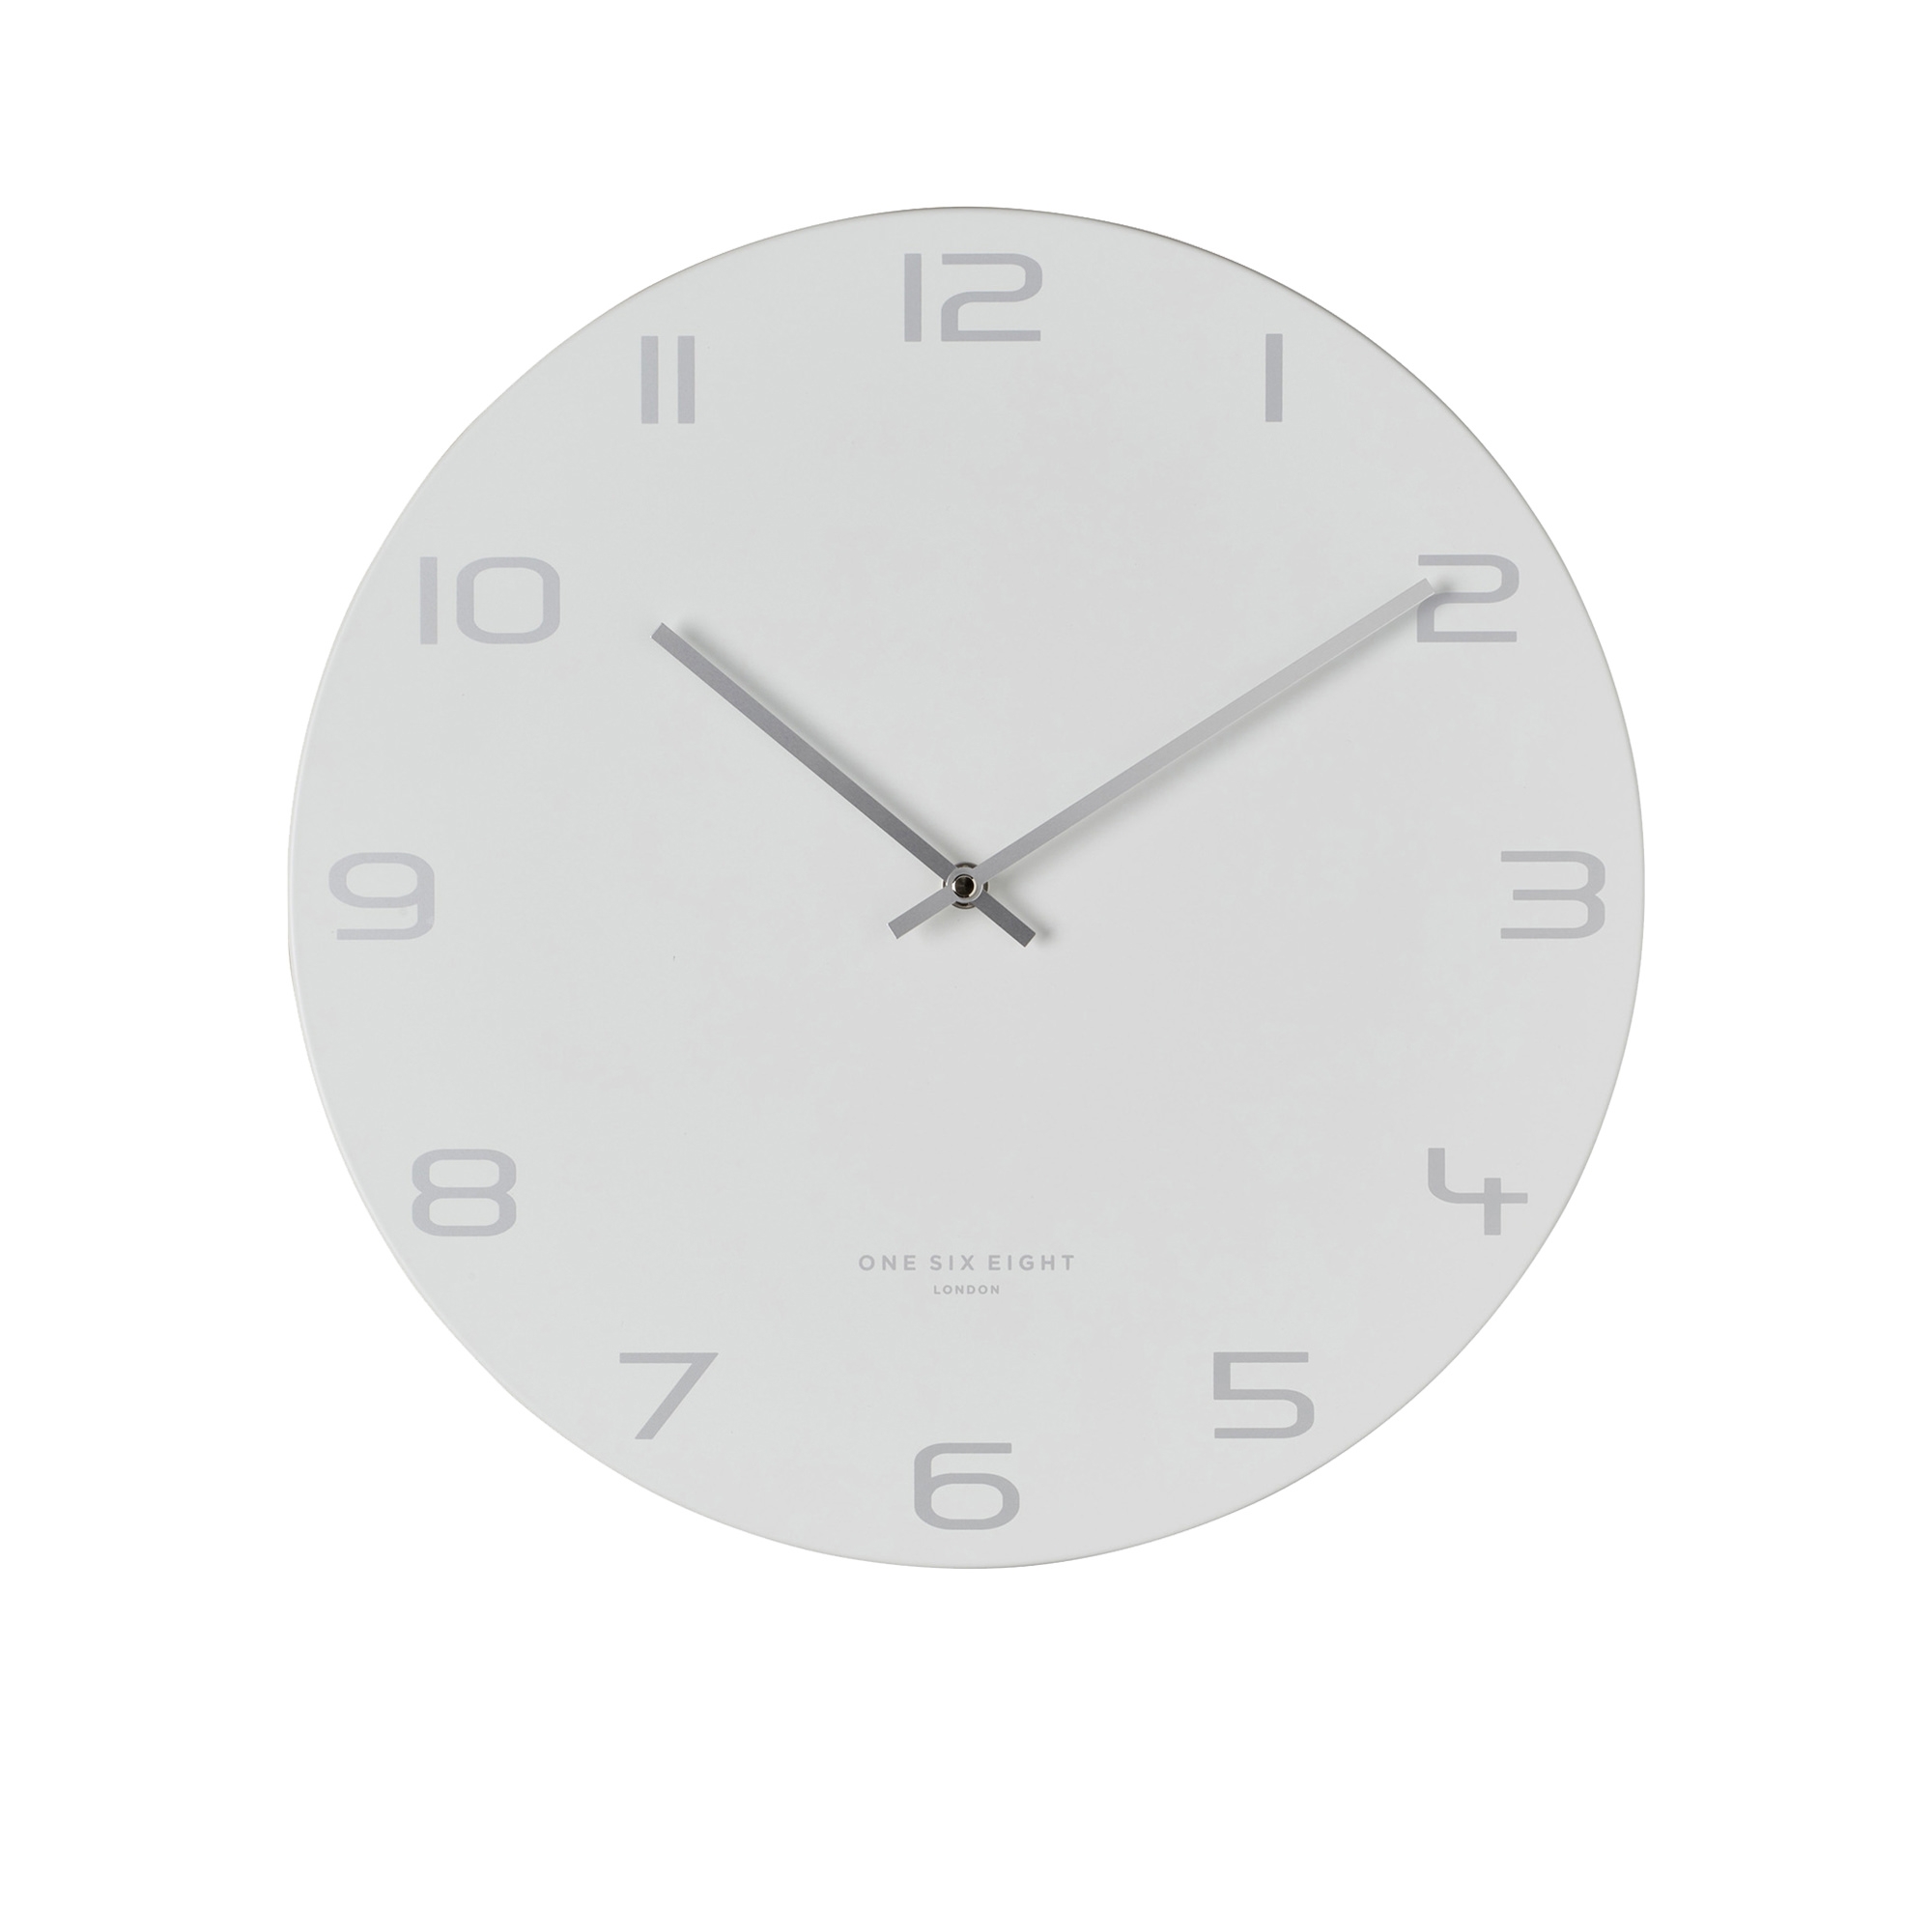 One Six Eight London Bianca Silent Wall Clock 40cm White Image 1